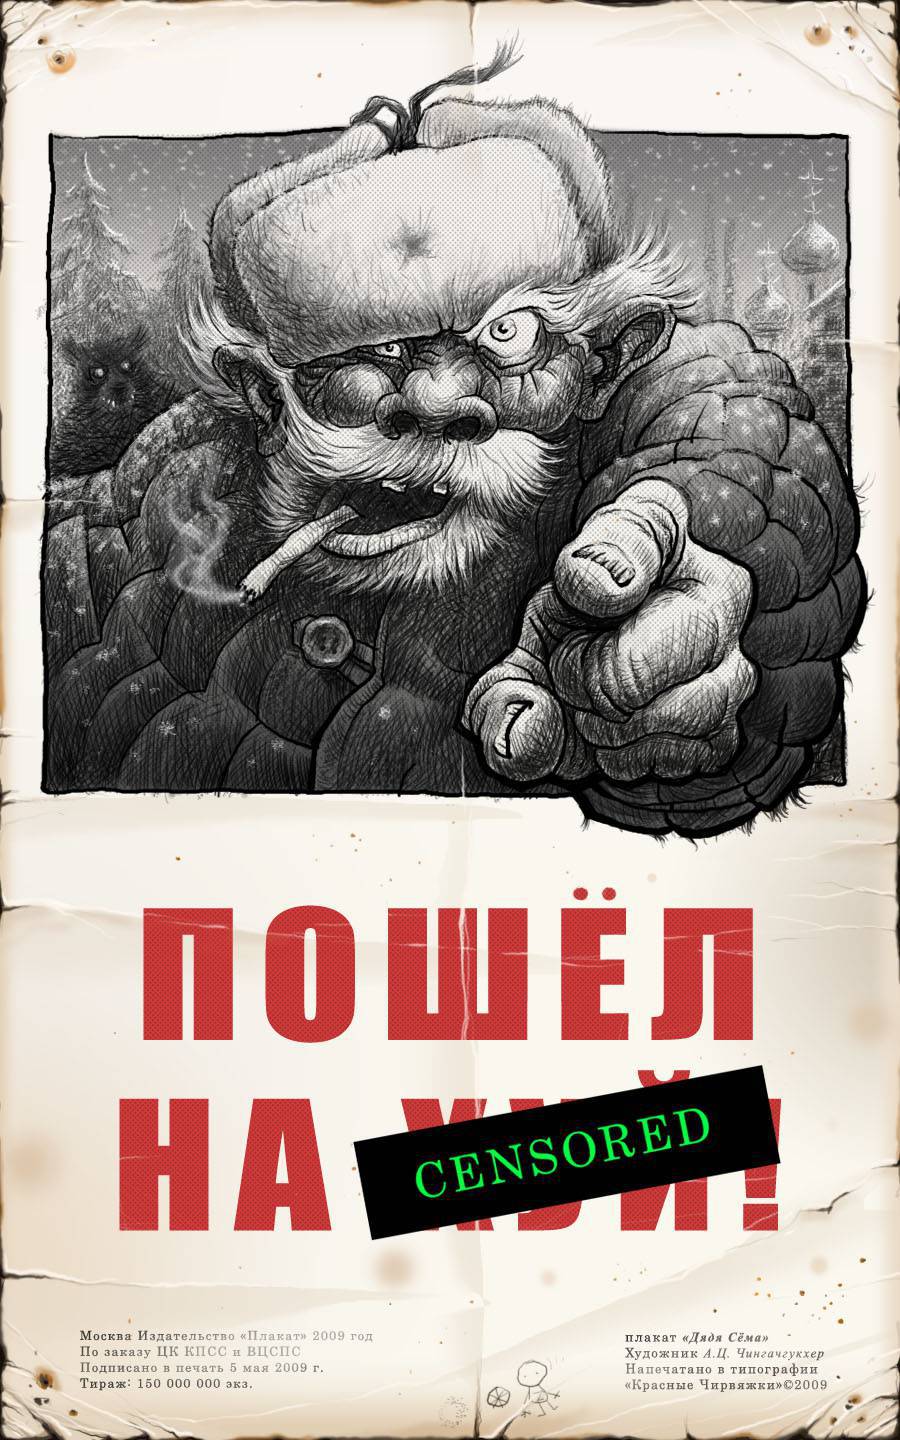  censored @ 18-porno.ru